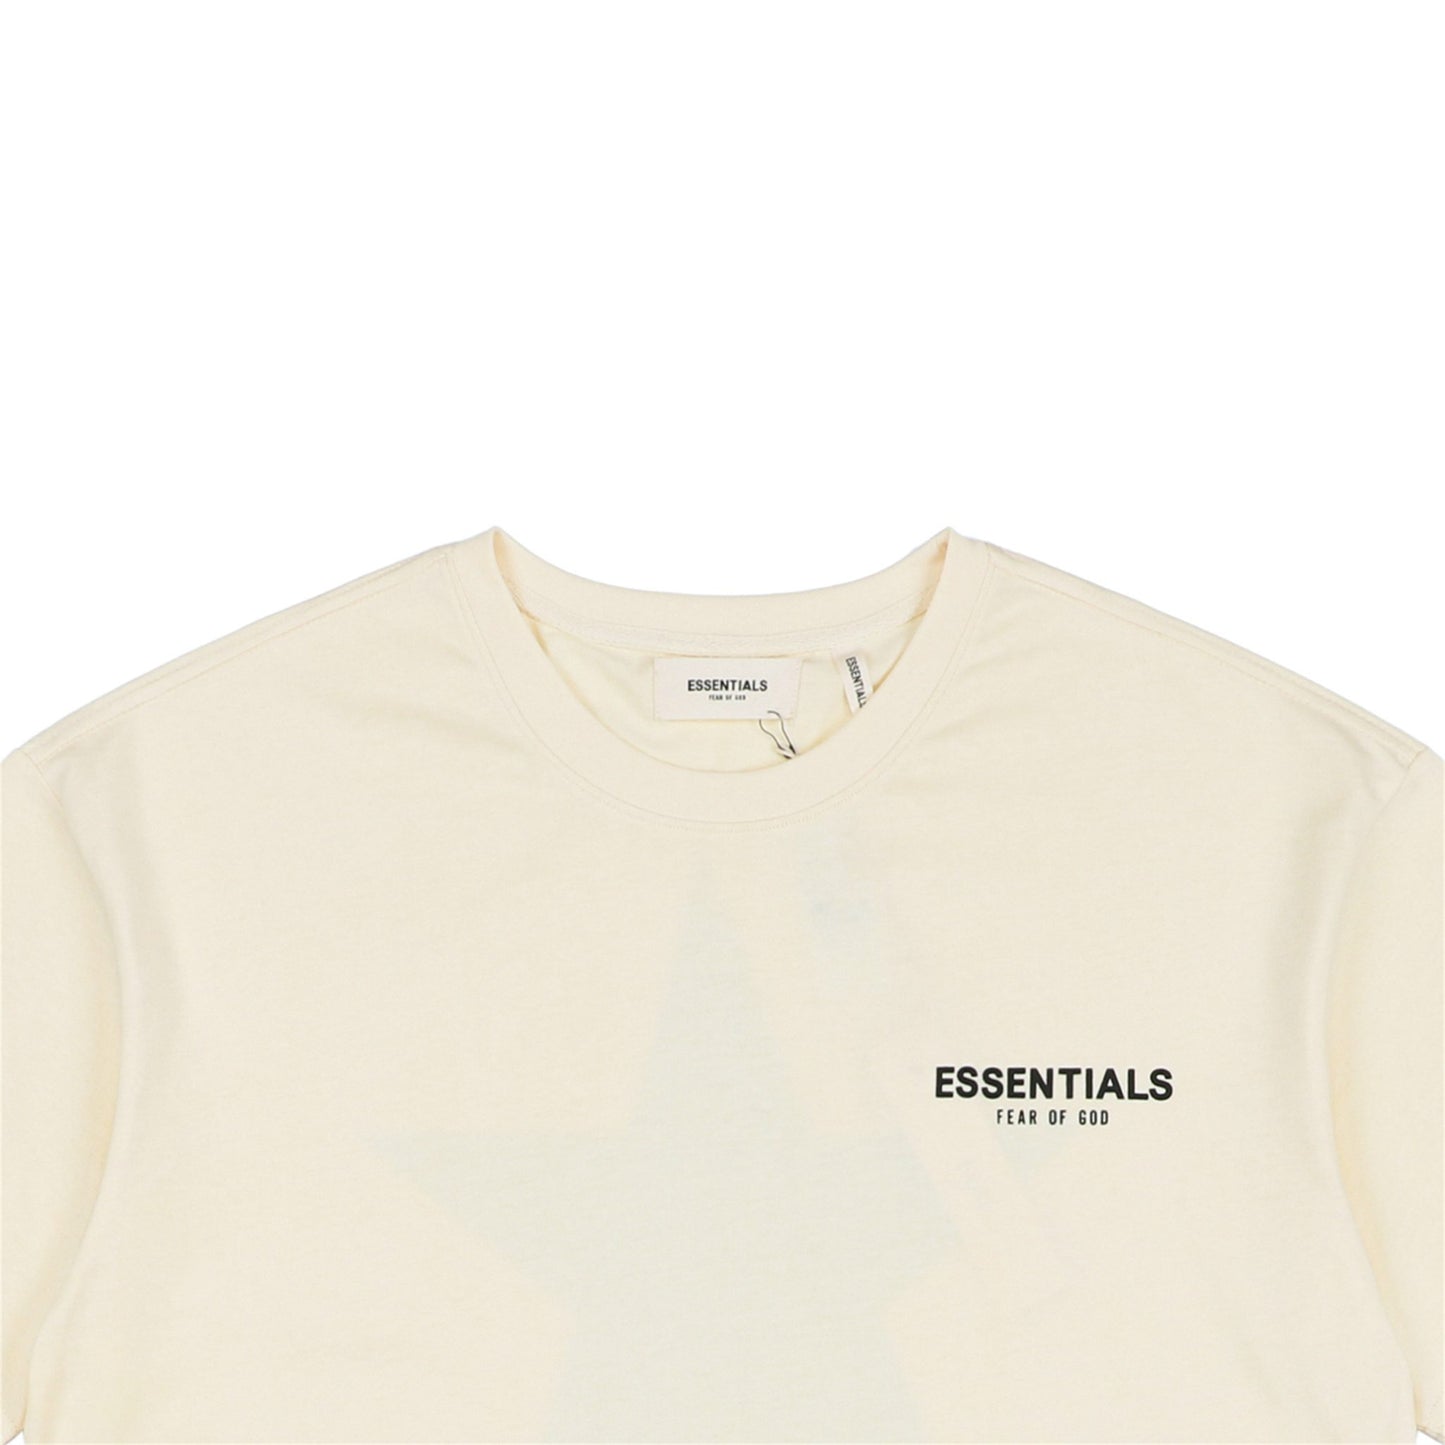 FOG Cream E55ential5 T-Shirt 2